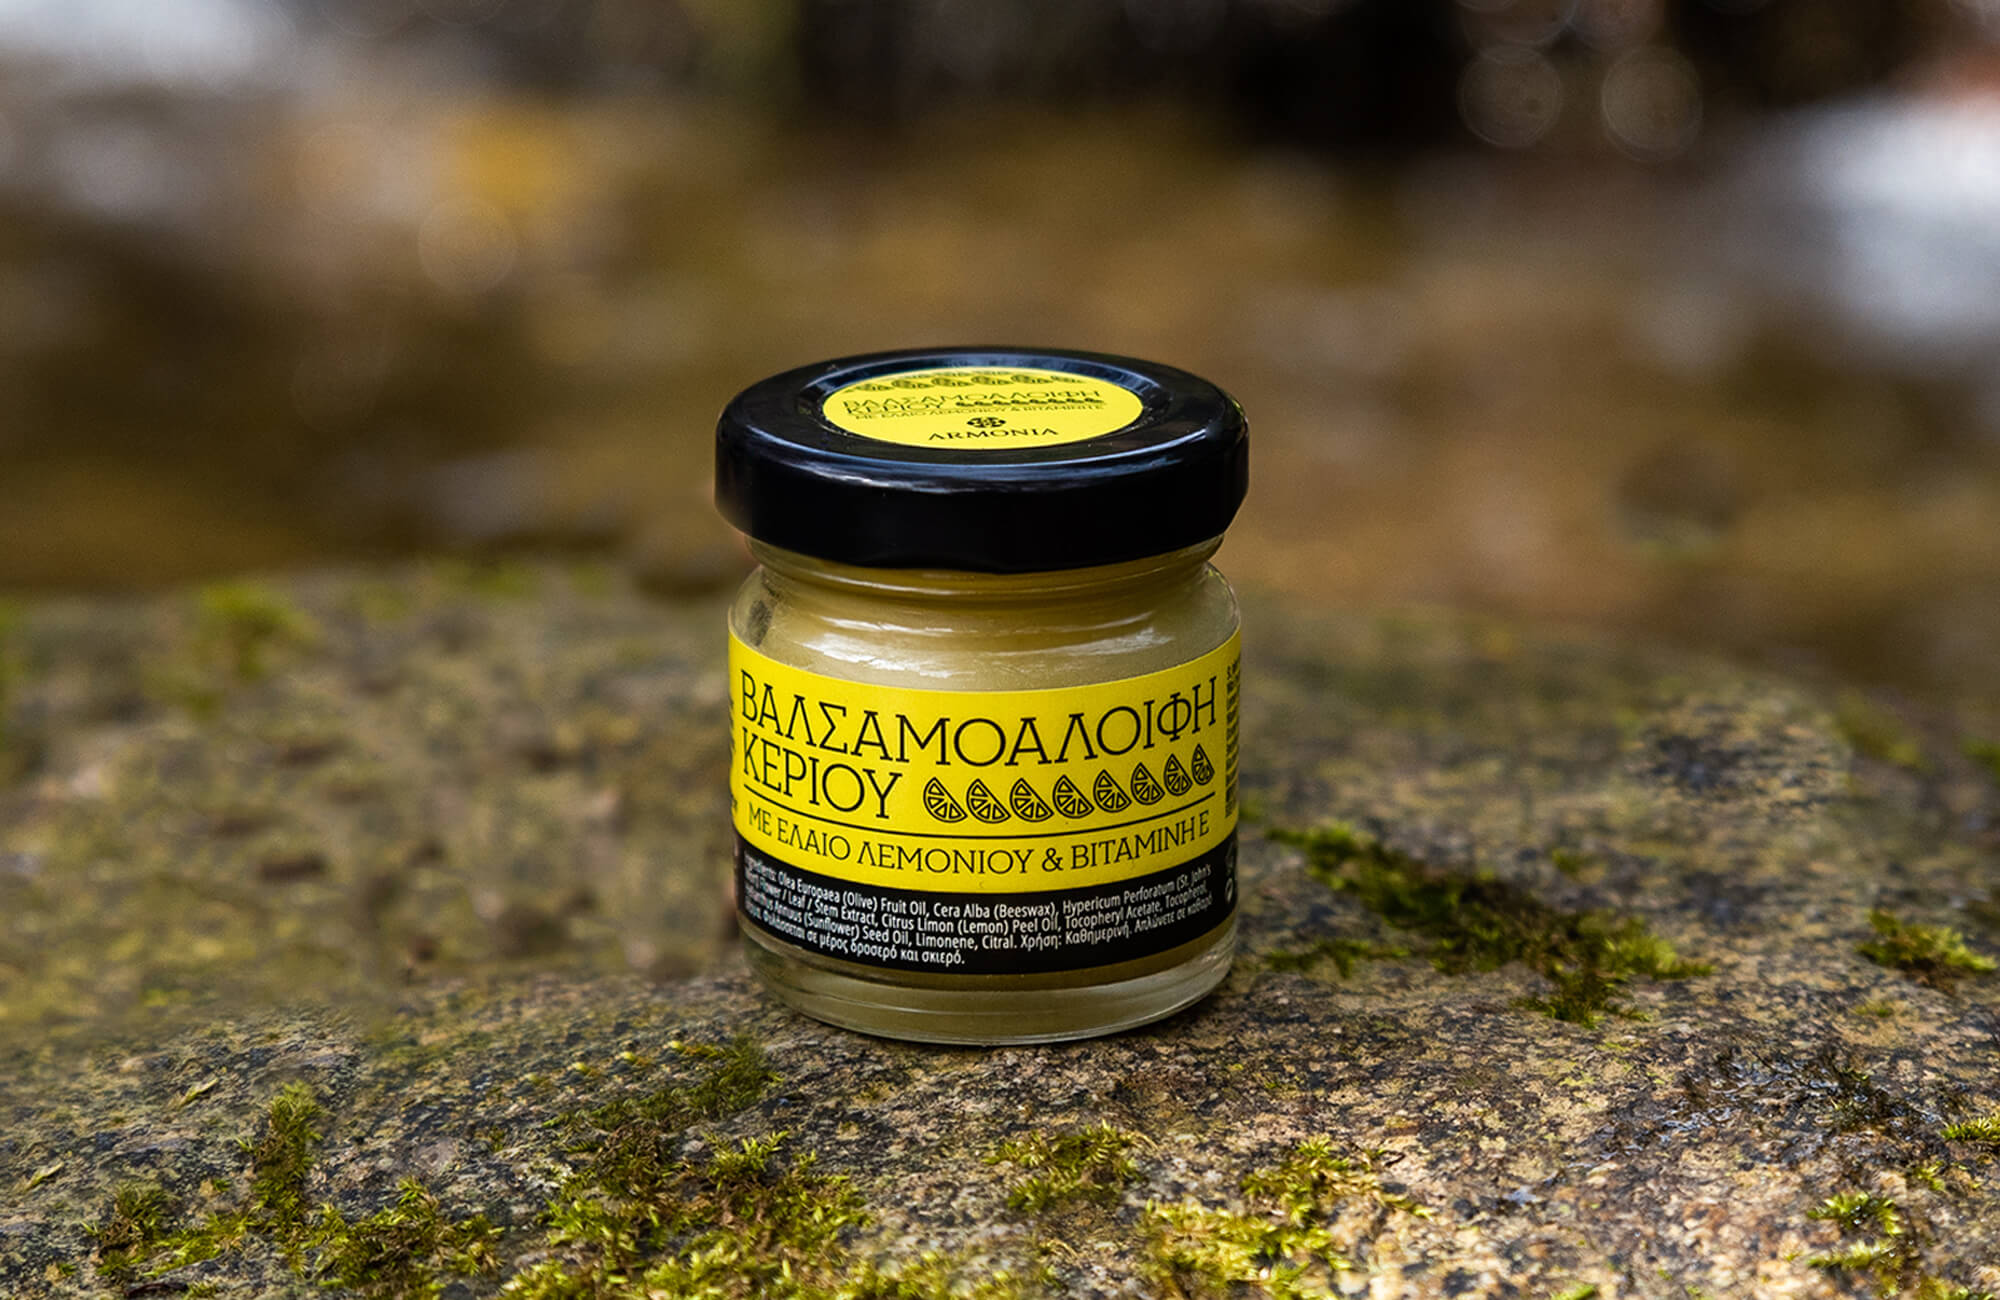 St. John’s wort oil wax cream lemon oil vitamin E natural cosmetics 100 made in Greece parabens free sls